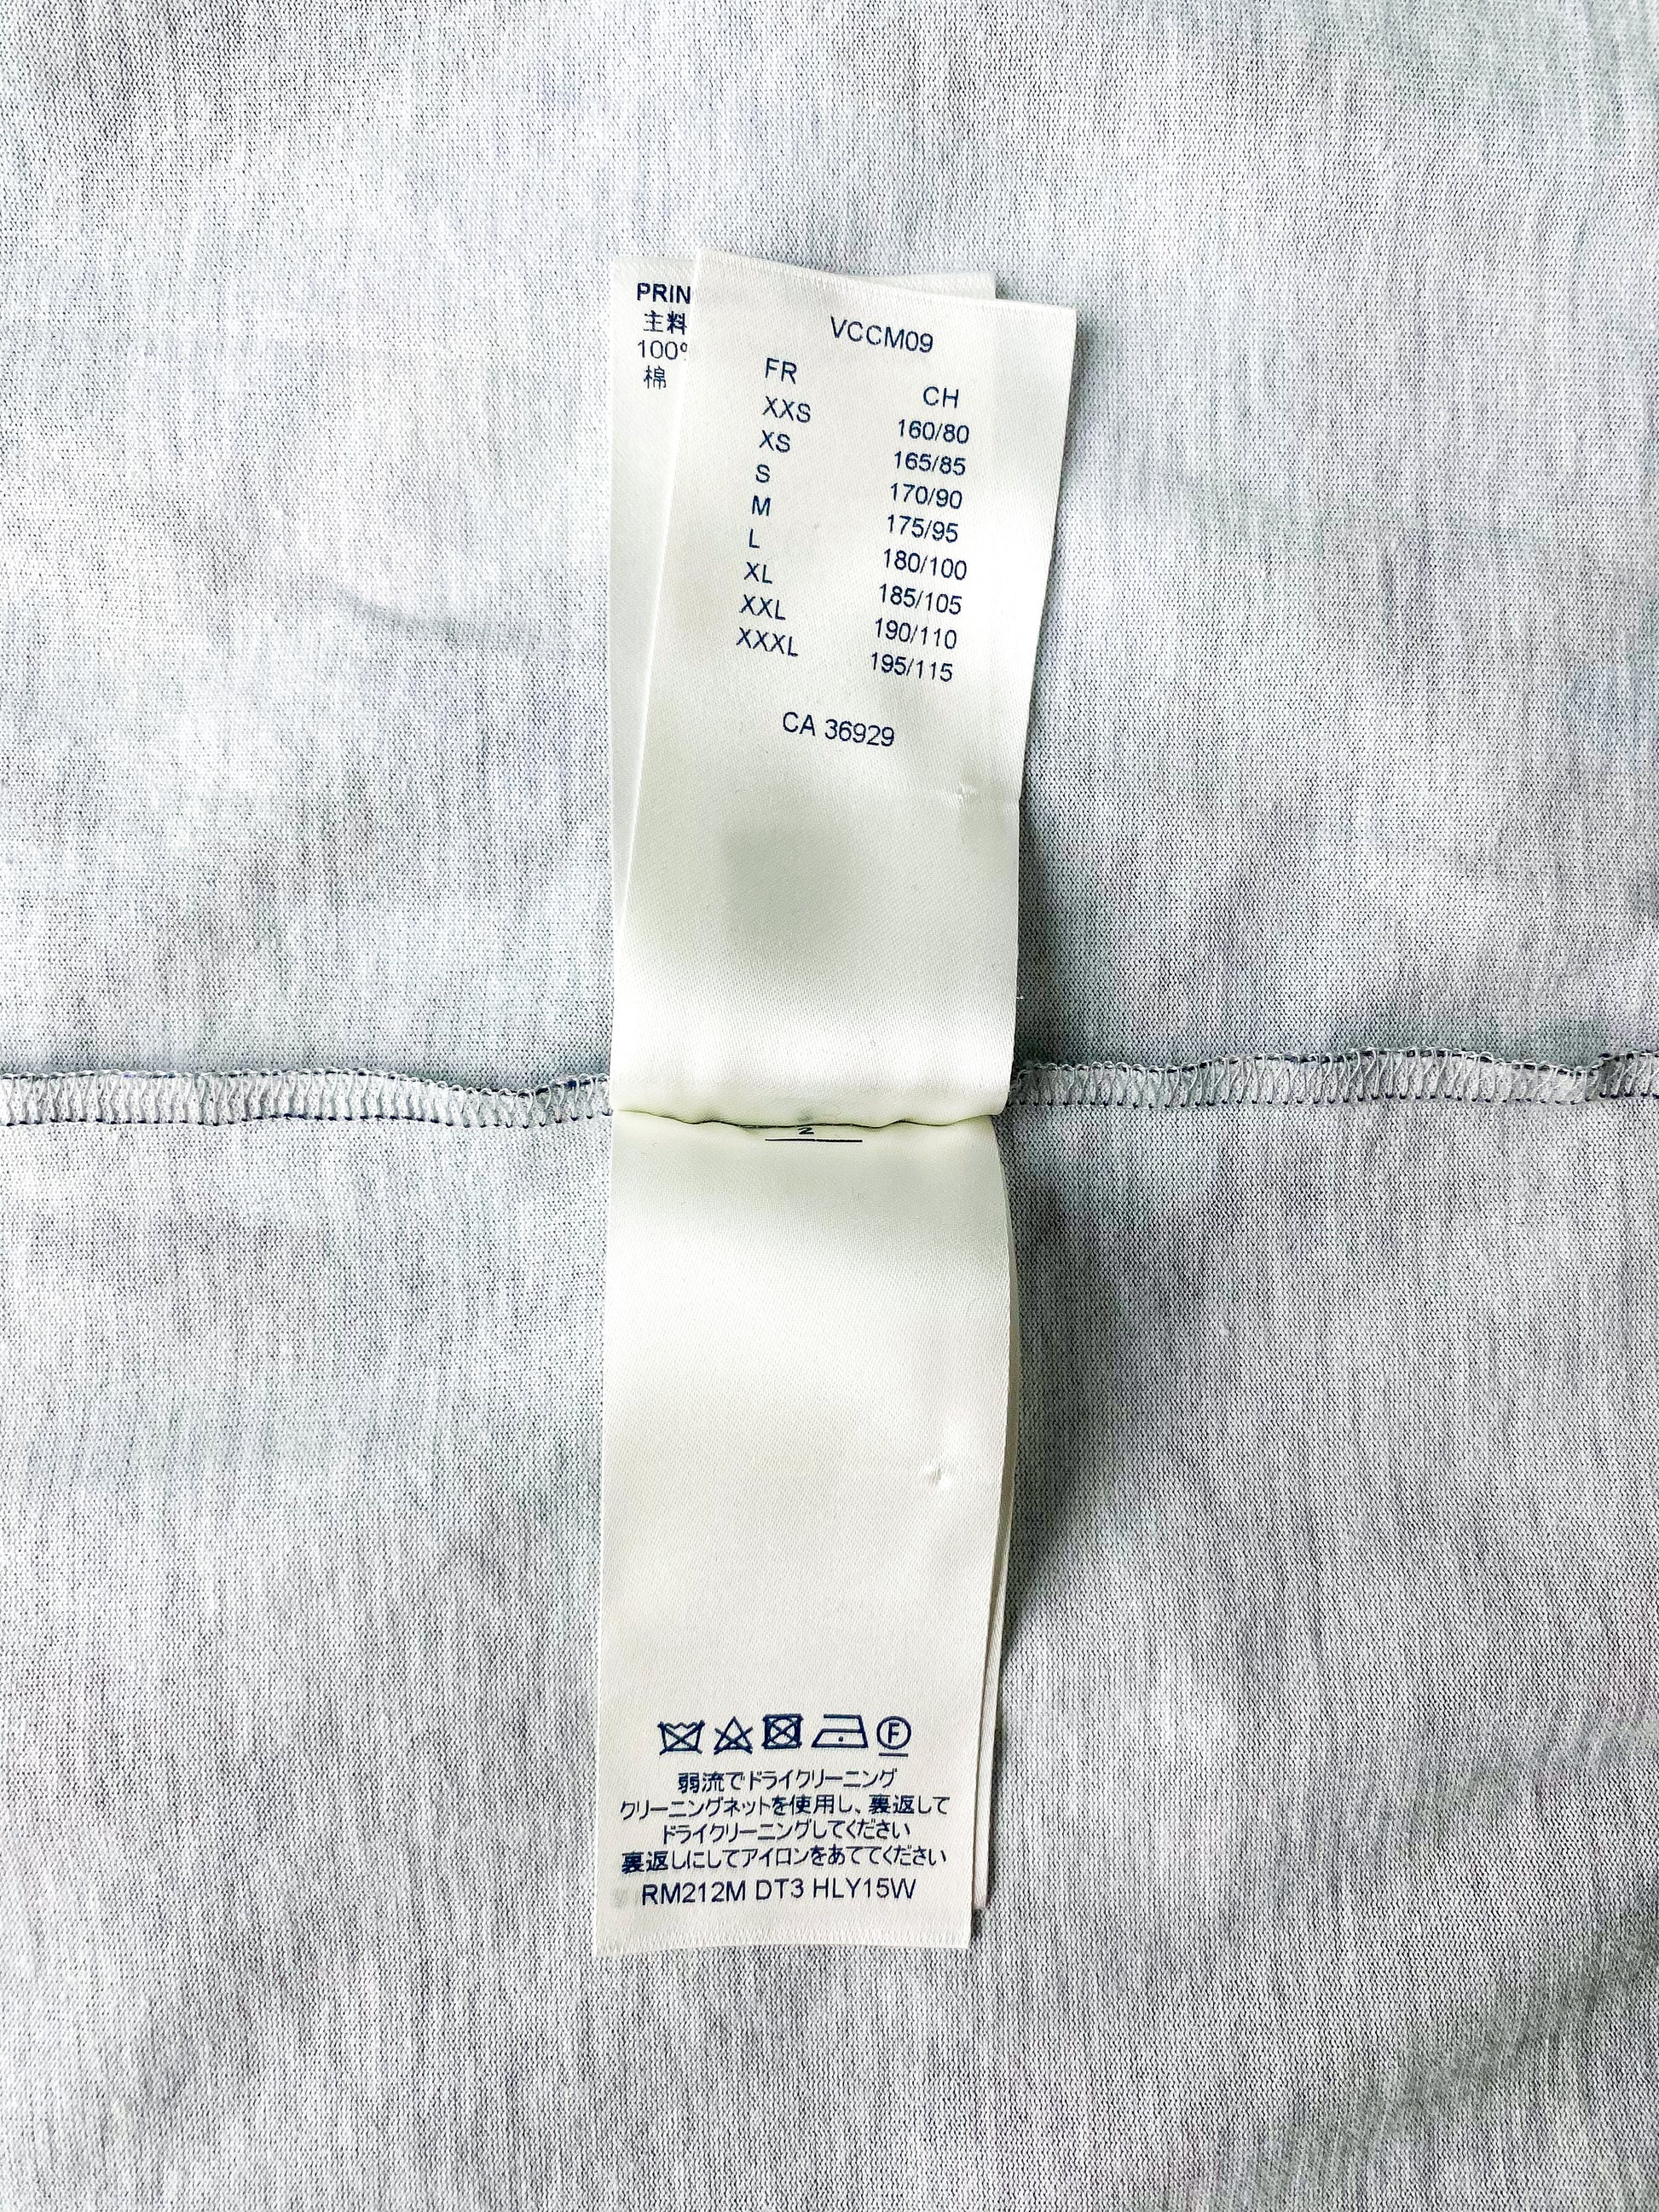 Louis Vuitton Text Printed Cotton T-shirt - Black/White